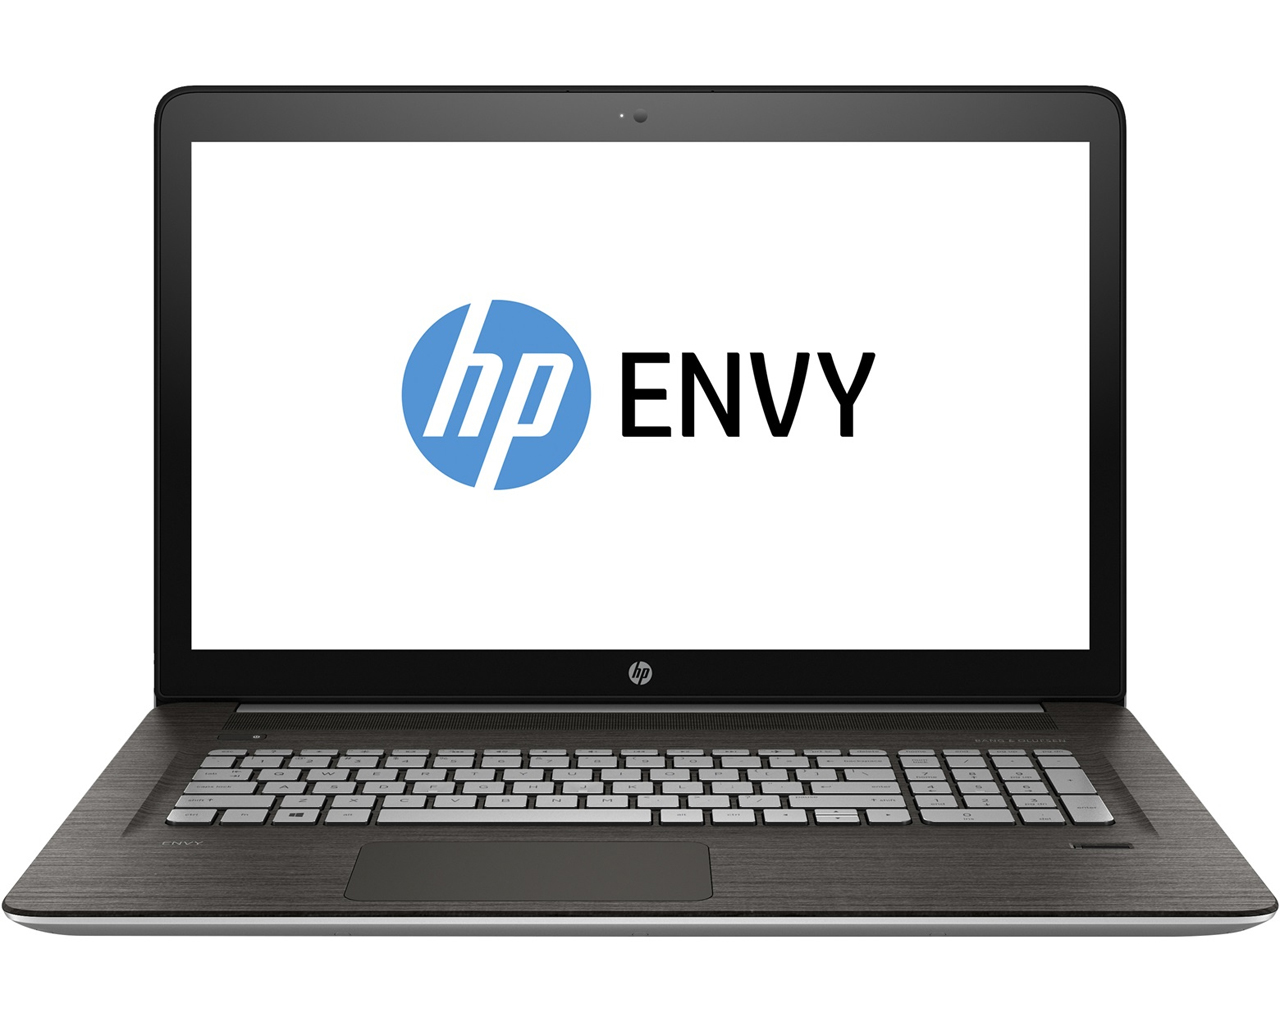 HP Envy 17-r182nz